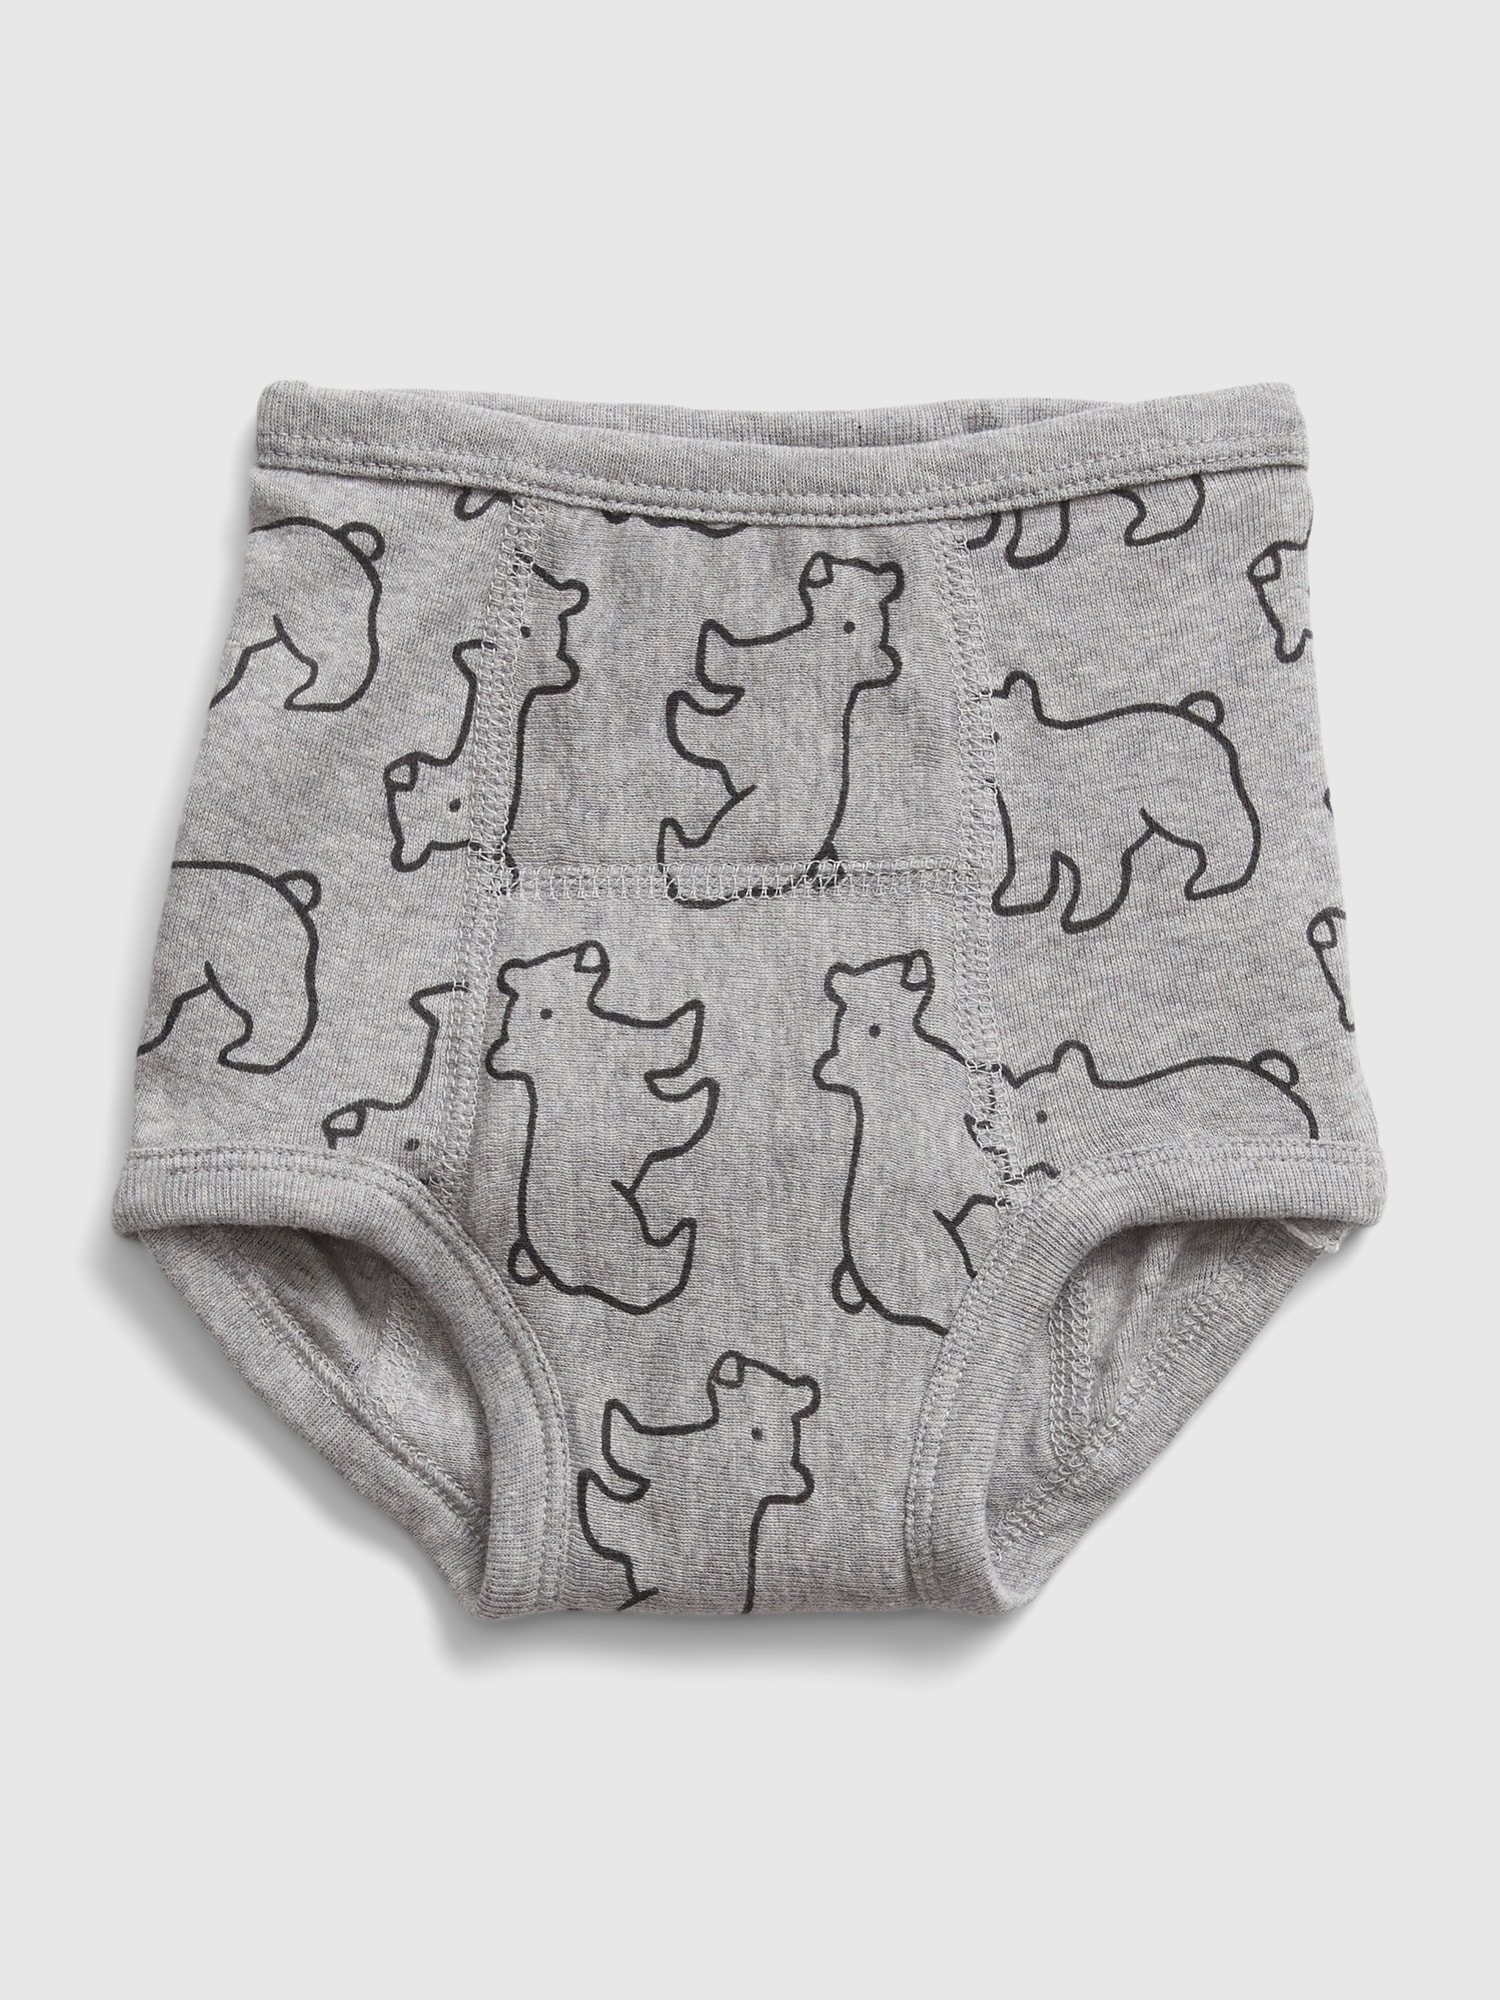  BIG ELEPHANT Potty Training Underwear, 100% Cotton